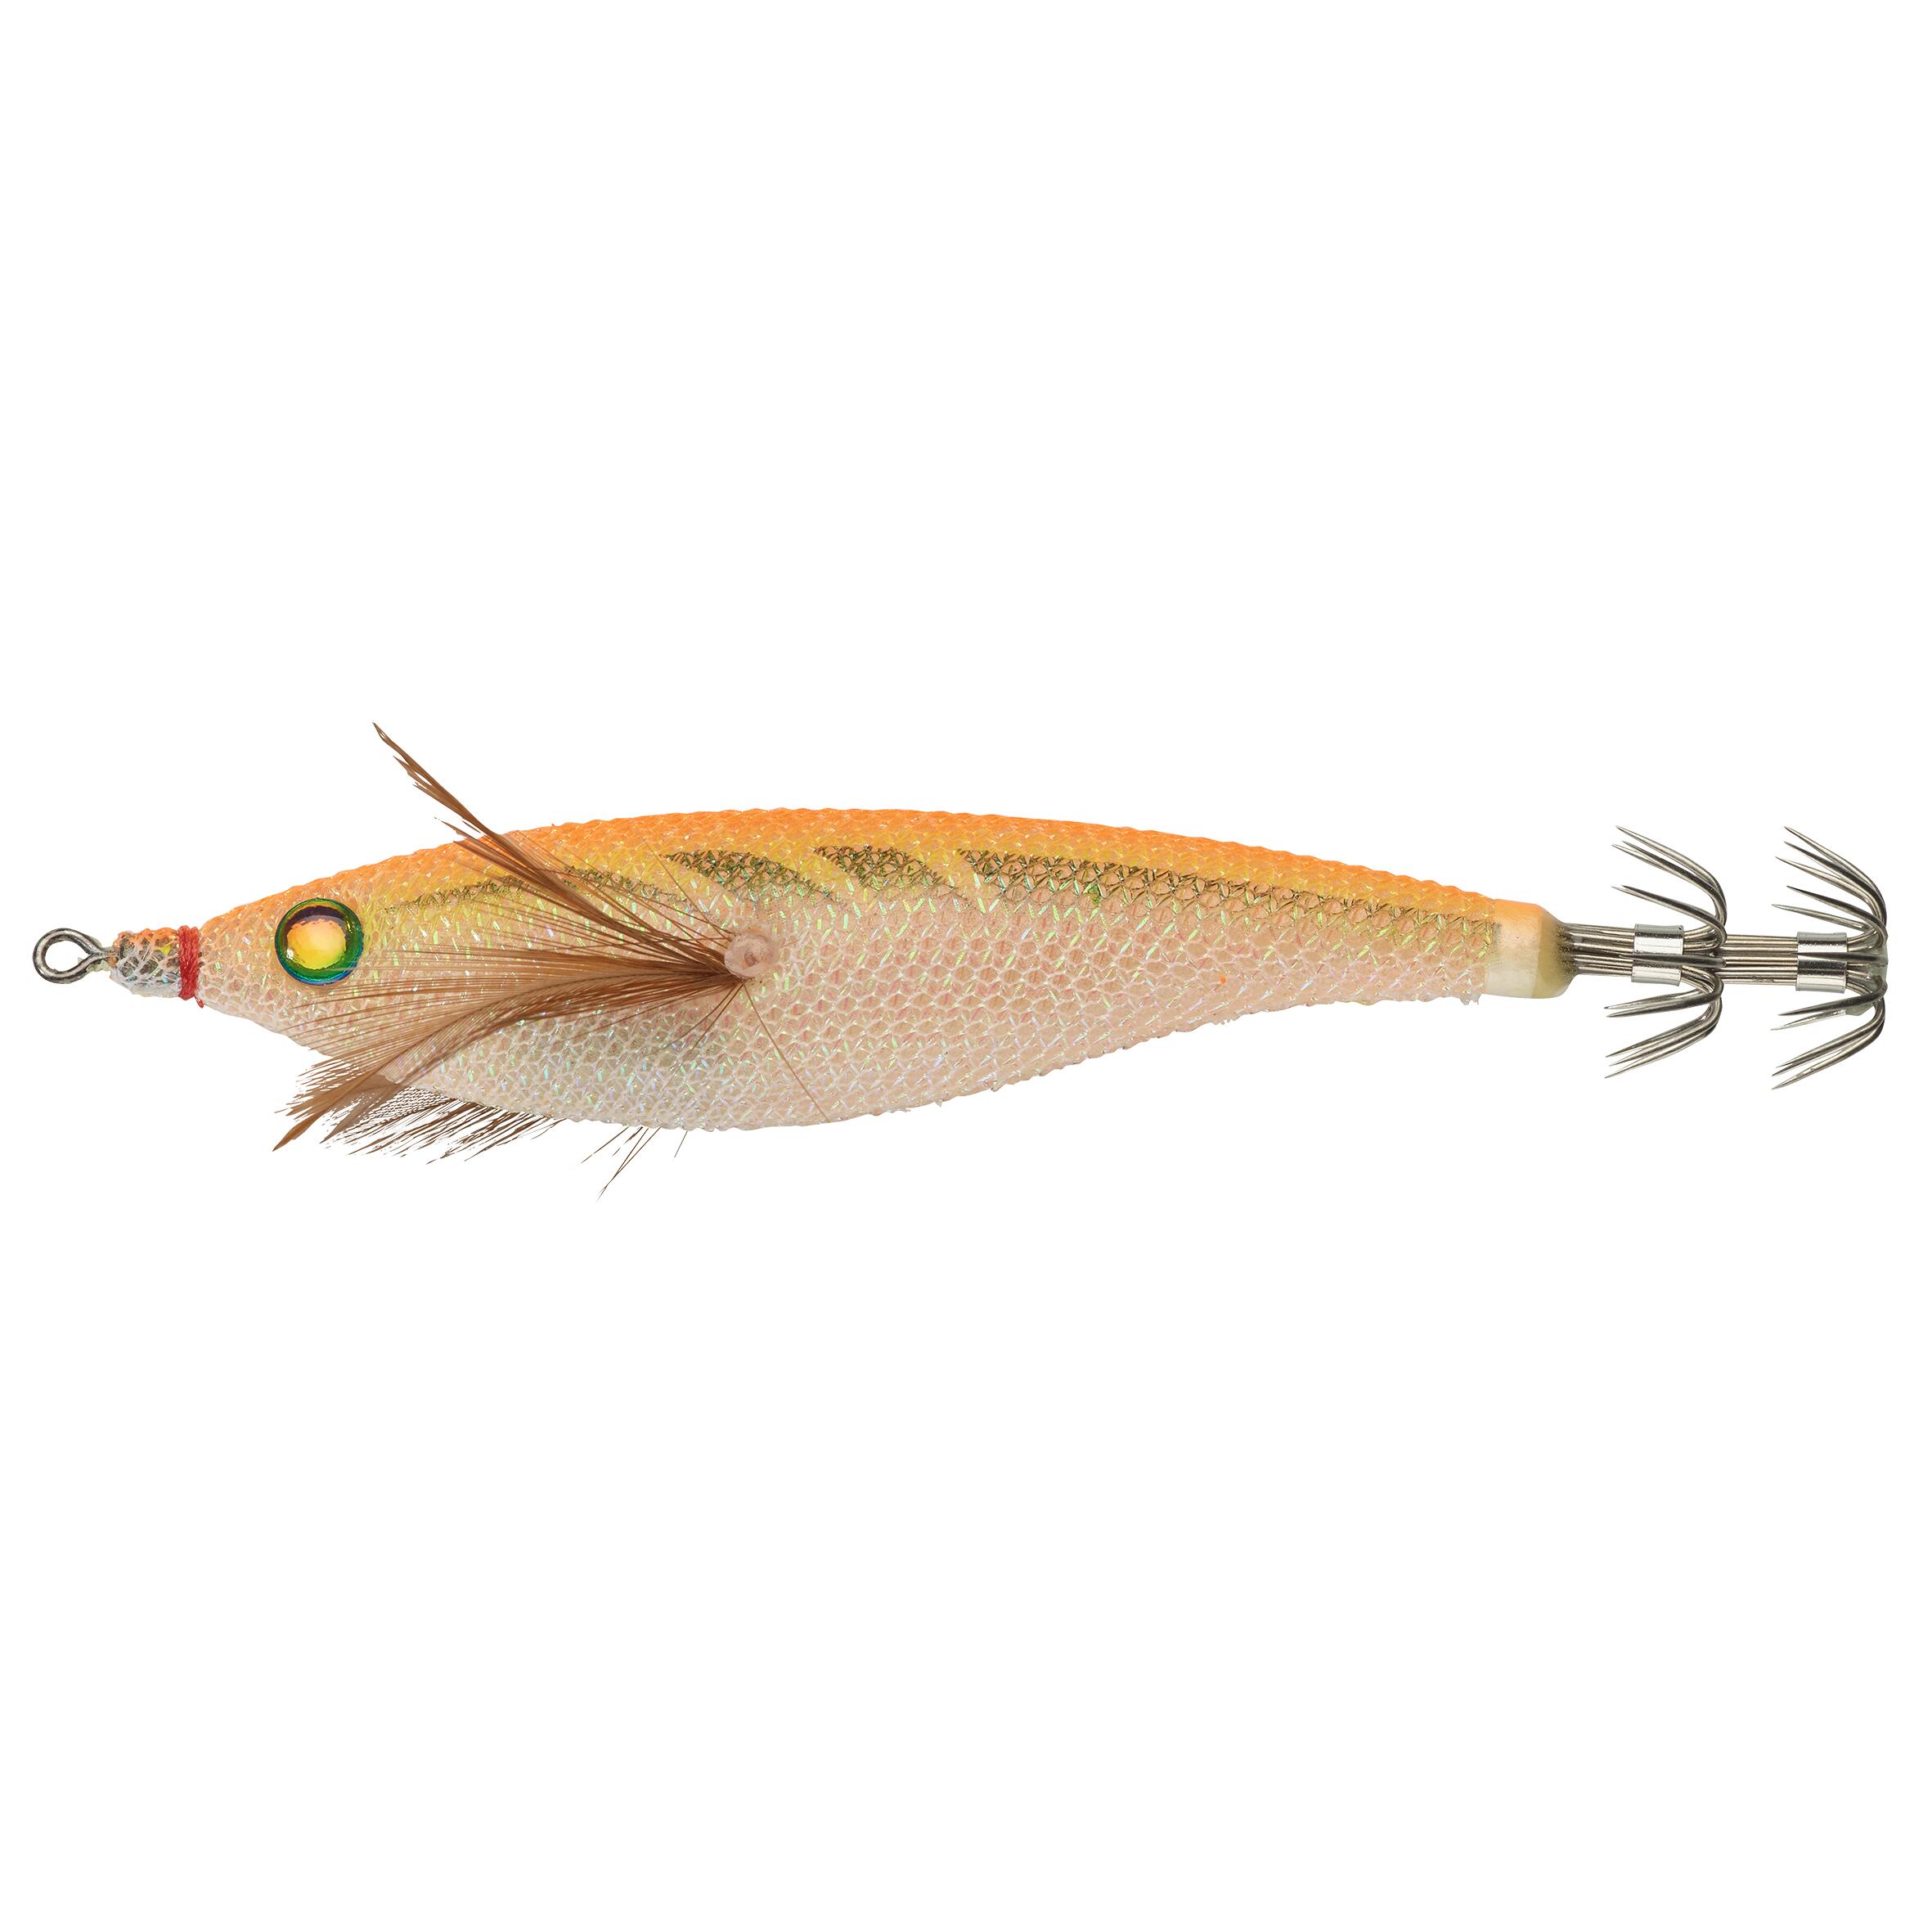 CAPERLAN Floating jig for cuttlefish/squid fishing EBIFLO 2.5/110 - Neon orange